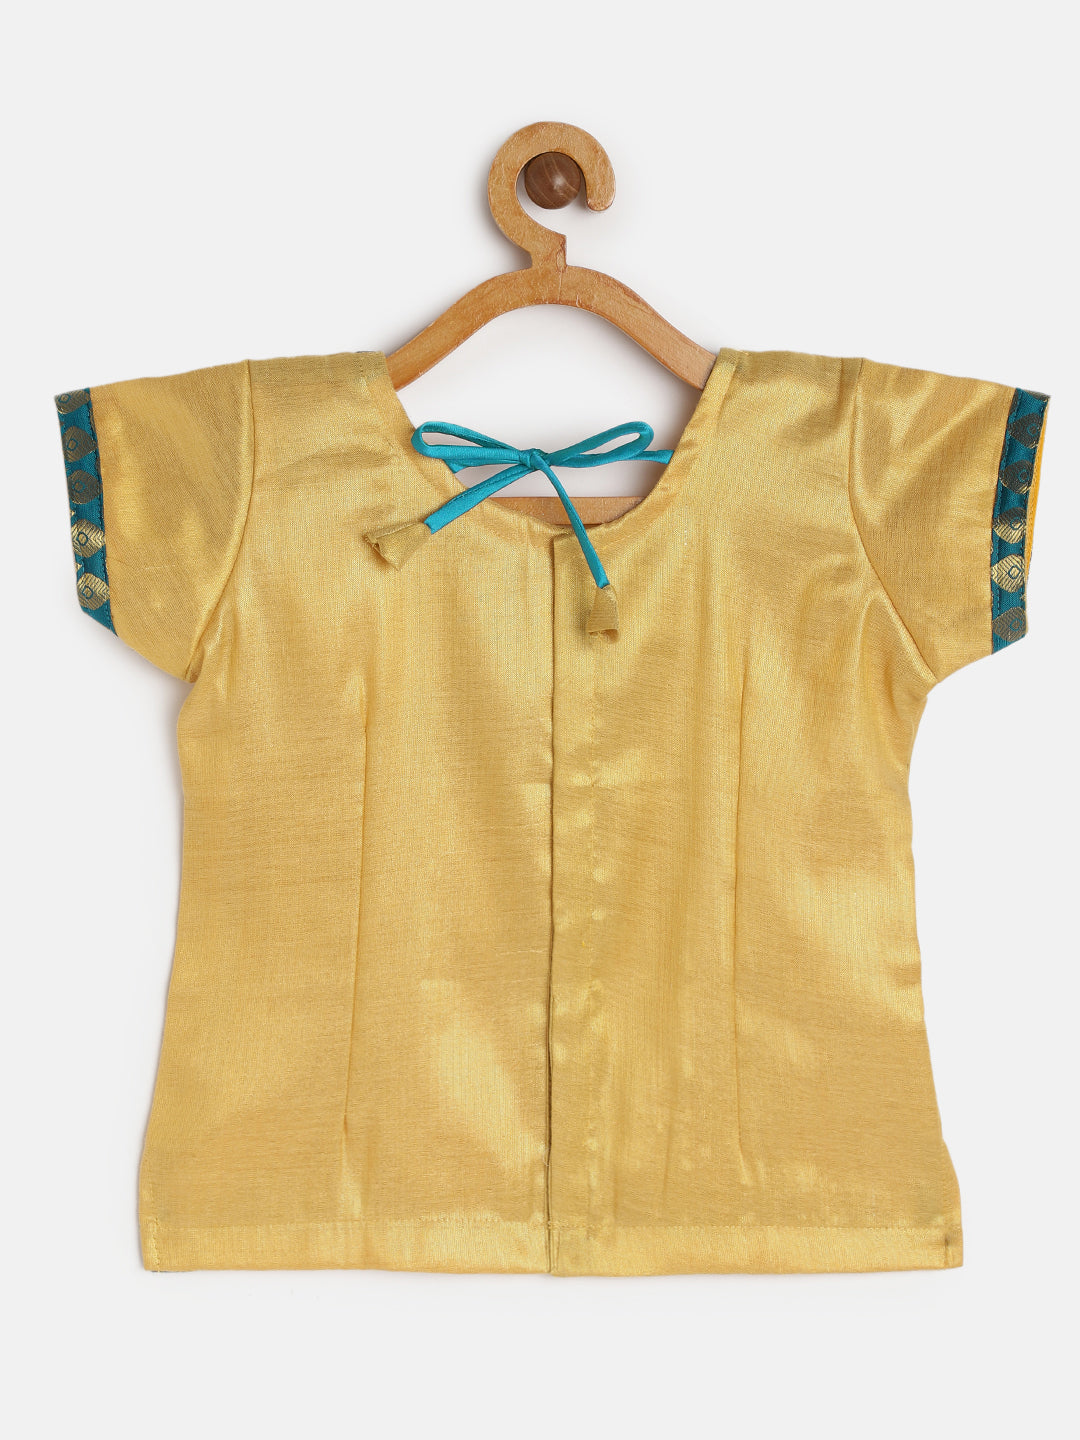 Girl's Gold Color Pavadai Set - BABY LAKSHMI